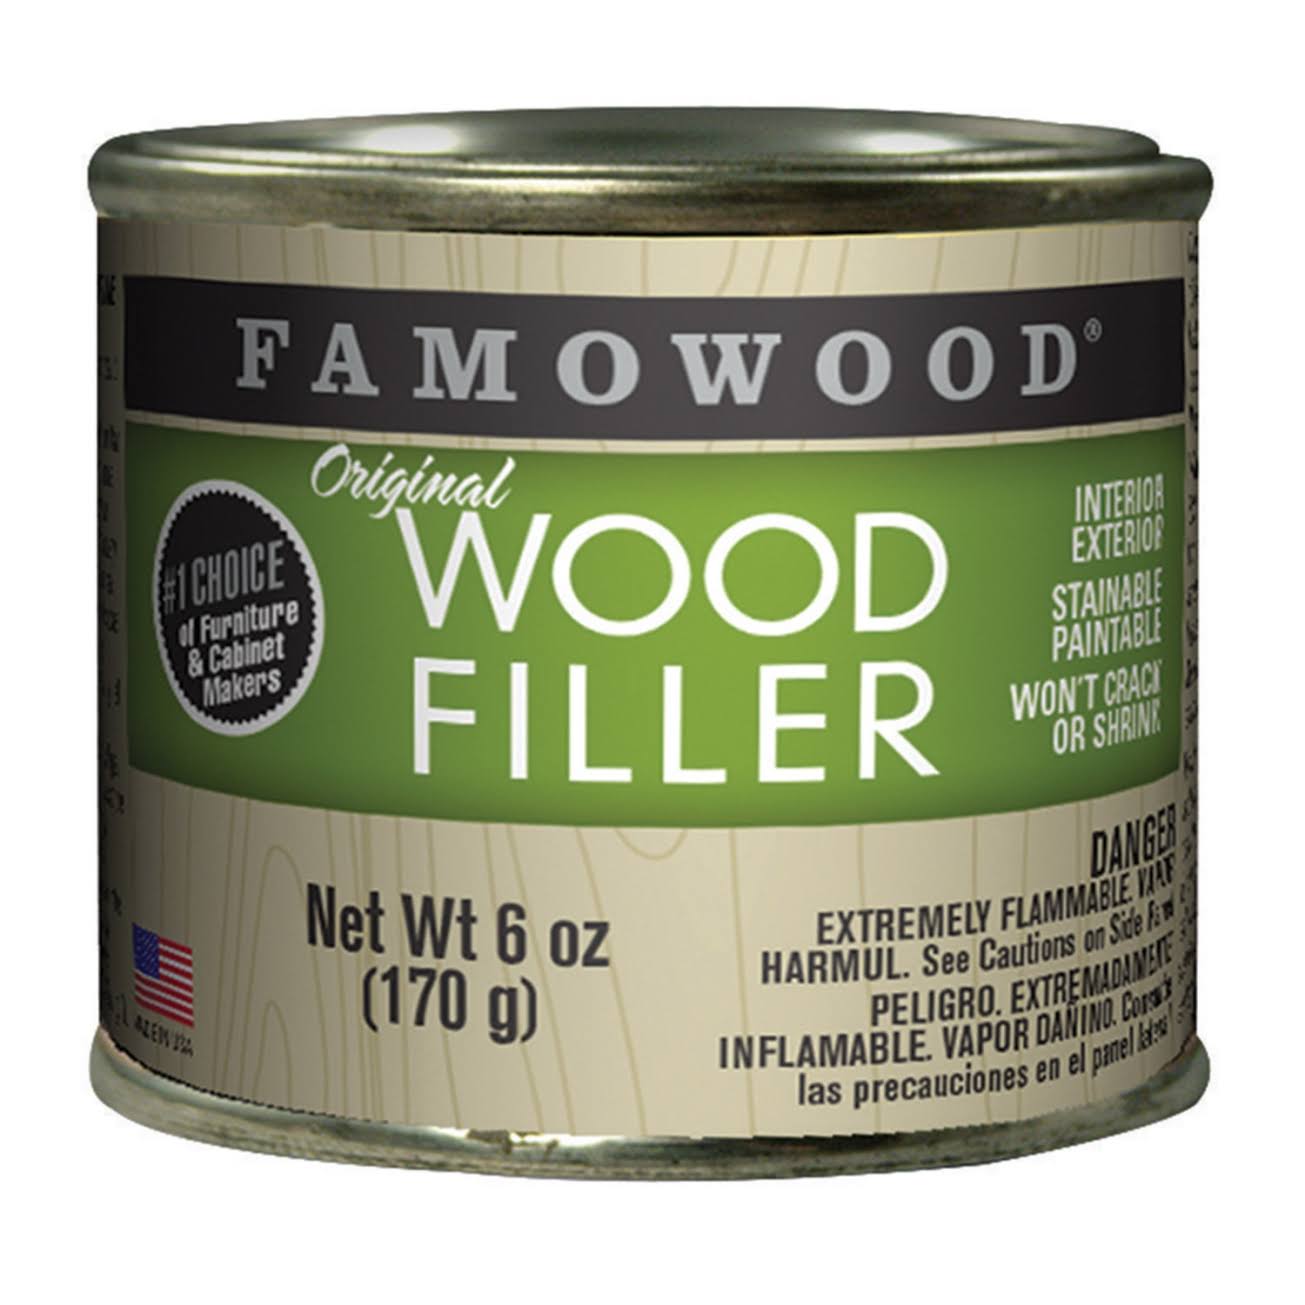 FamoWood Original Wood Filler - 6oz